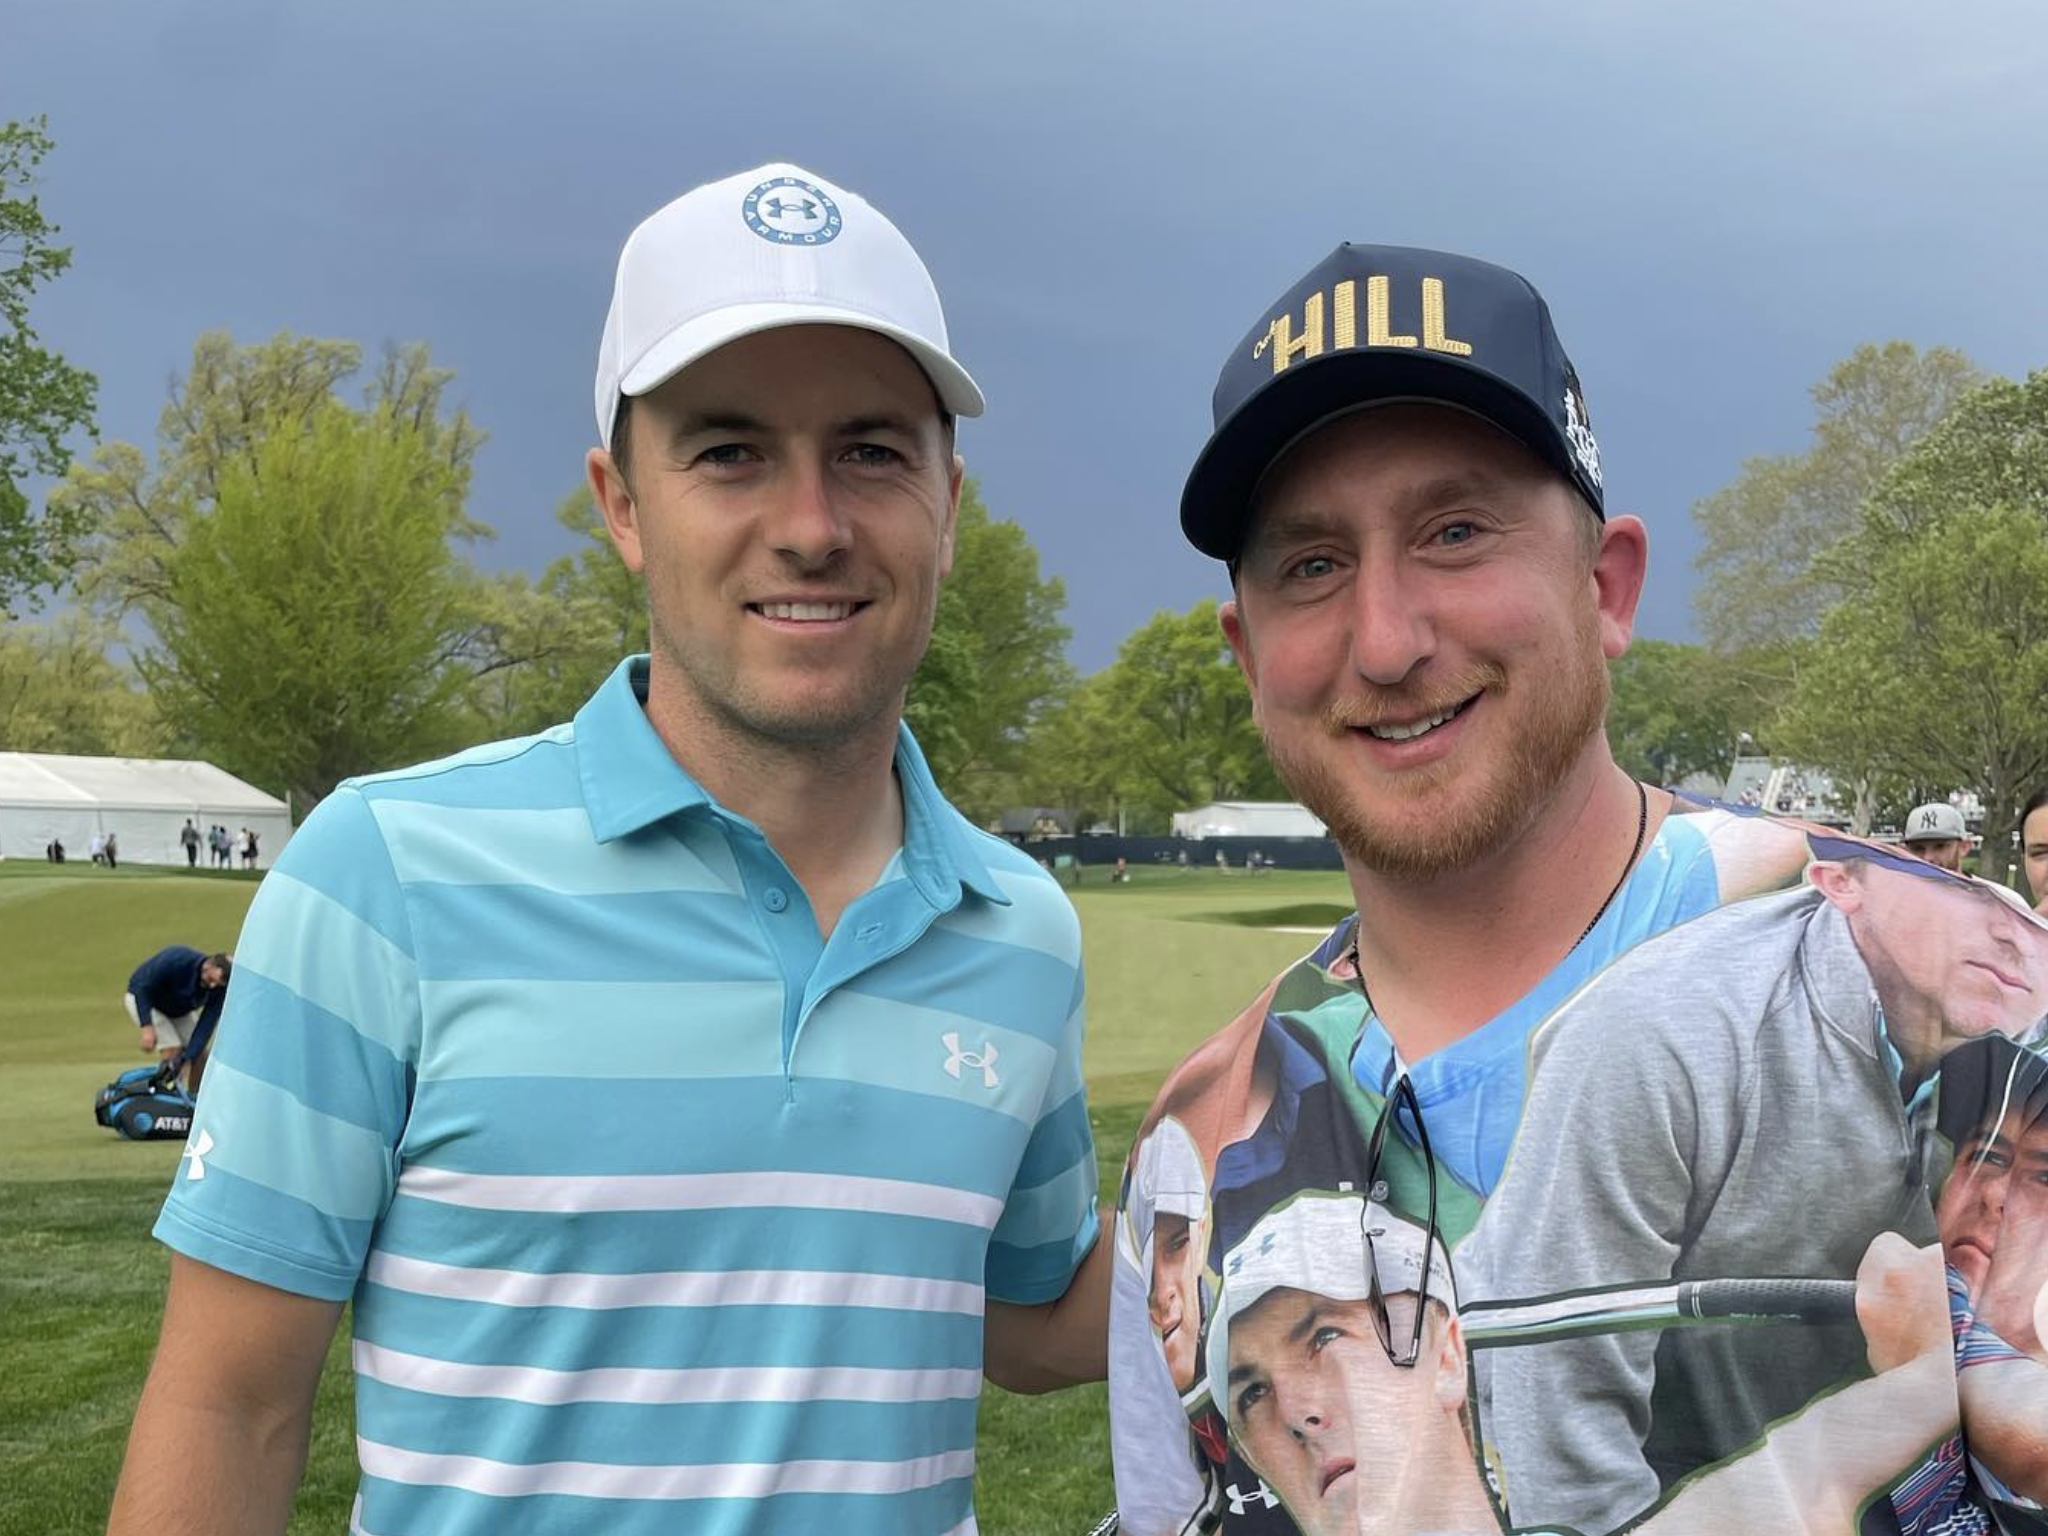 Superfan with very unique shirt surprises Jordan Spieth at PGA Championship  – GolfWRX